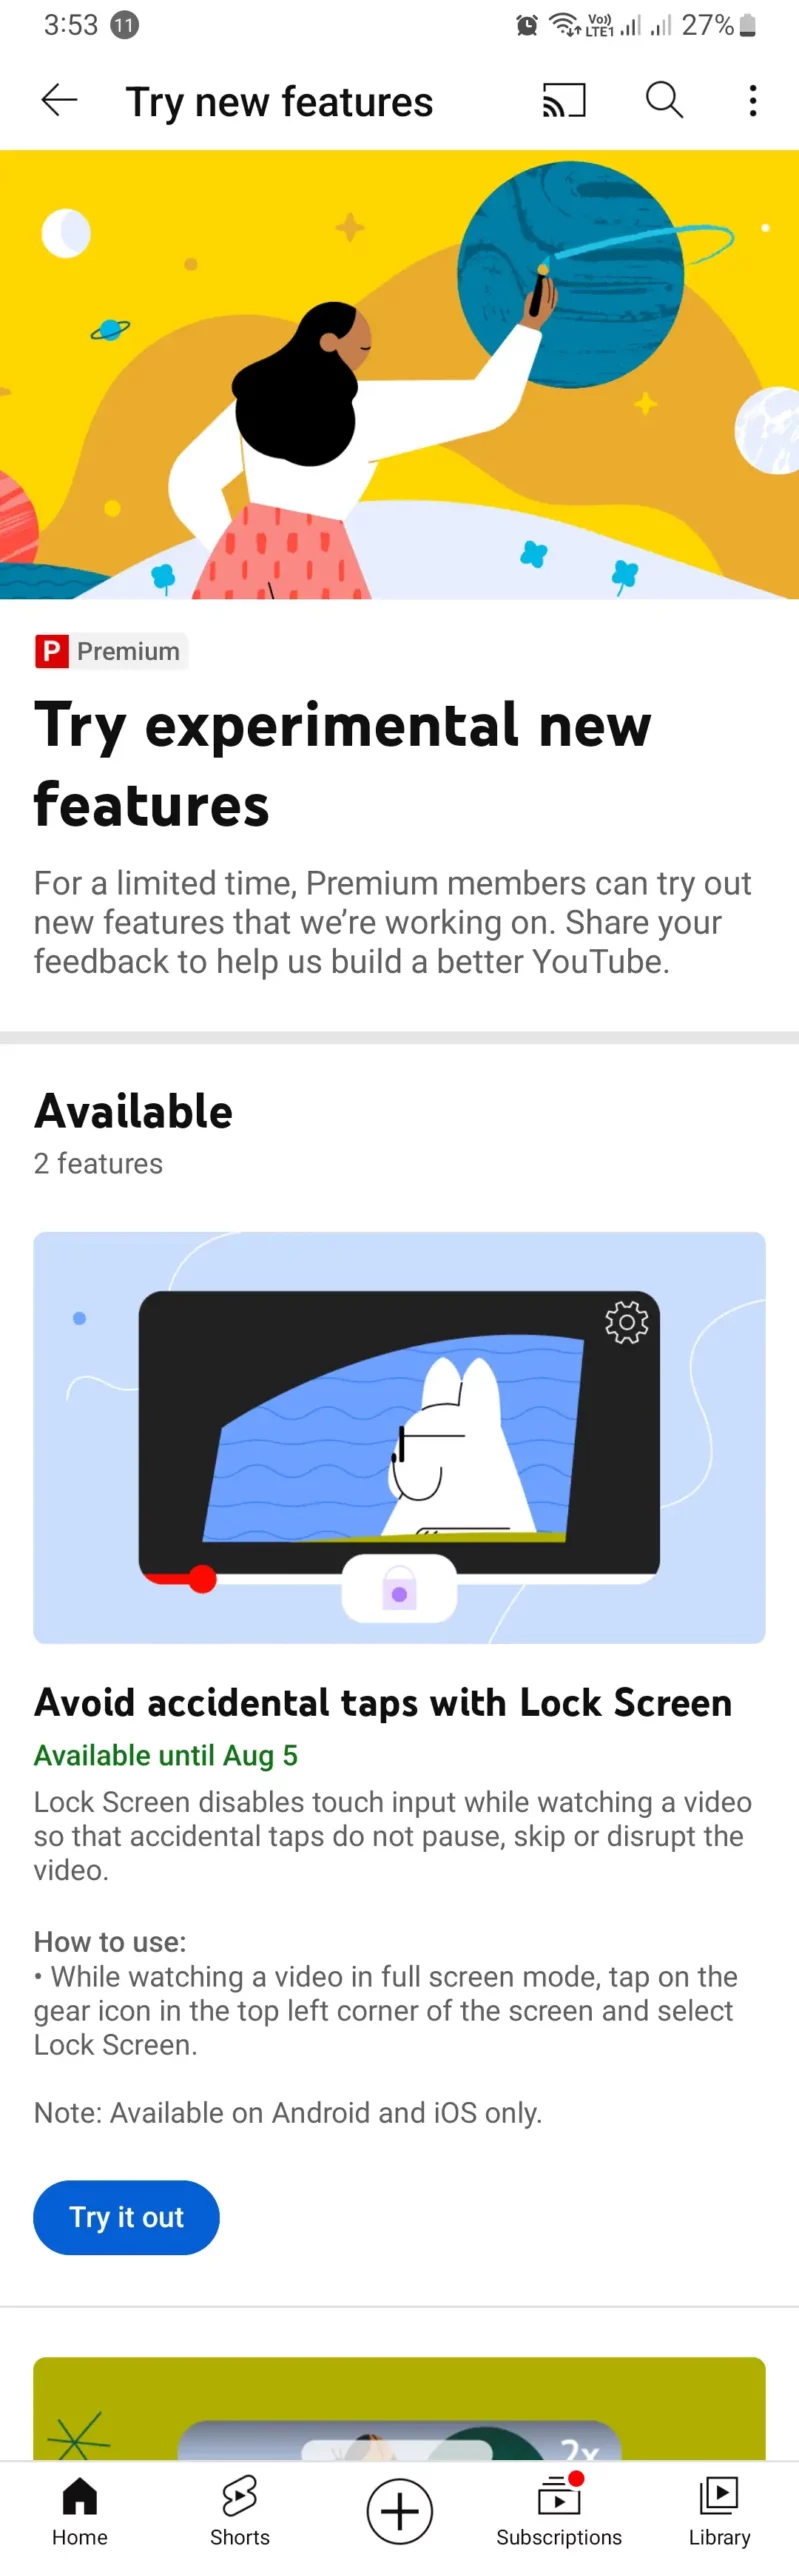 youtube new accidental tap lock screen feature screenshot